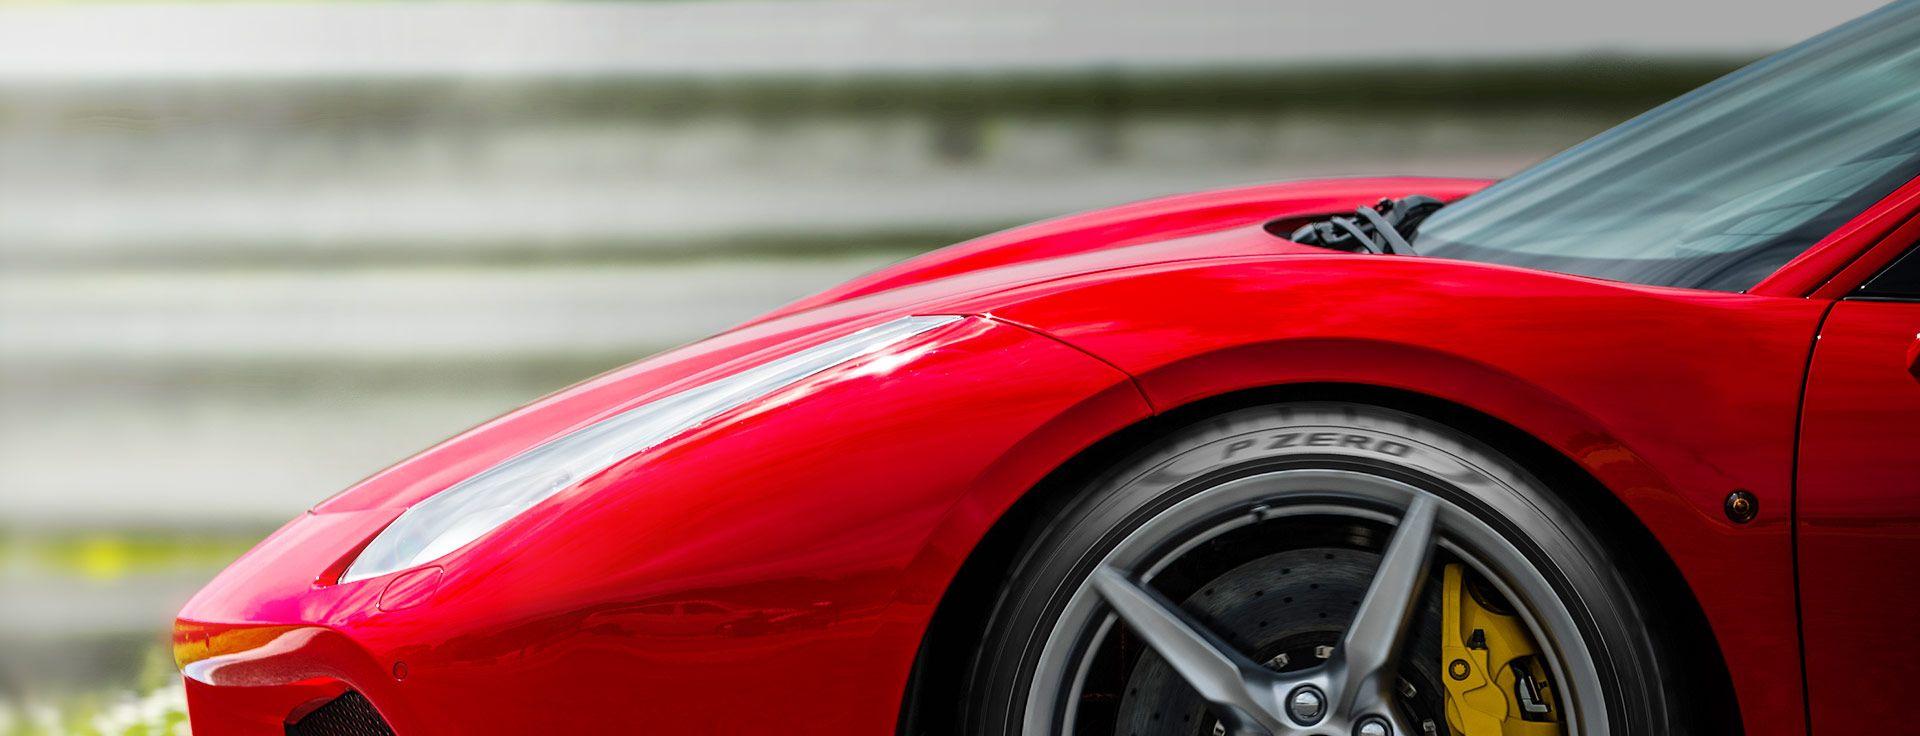 Ferrari - Pirelli for Ferrari: a story of Italian excellence